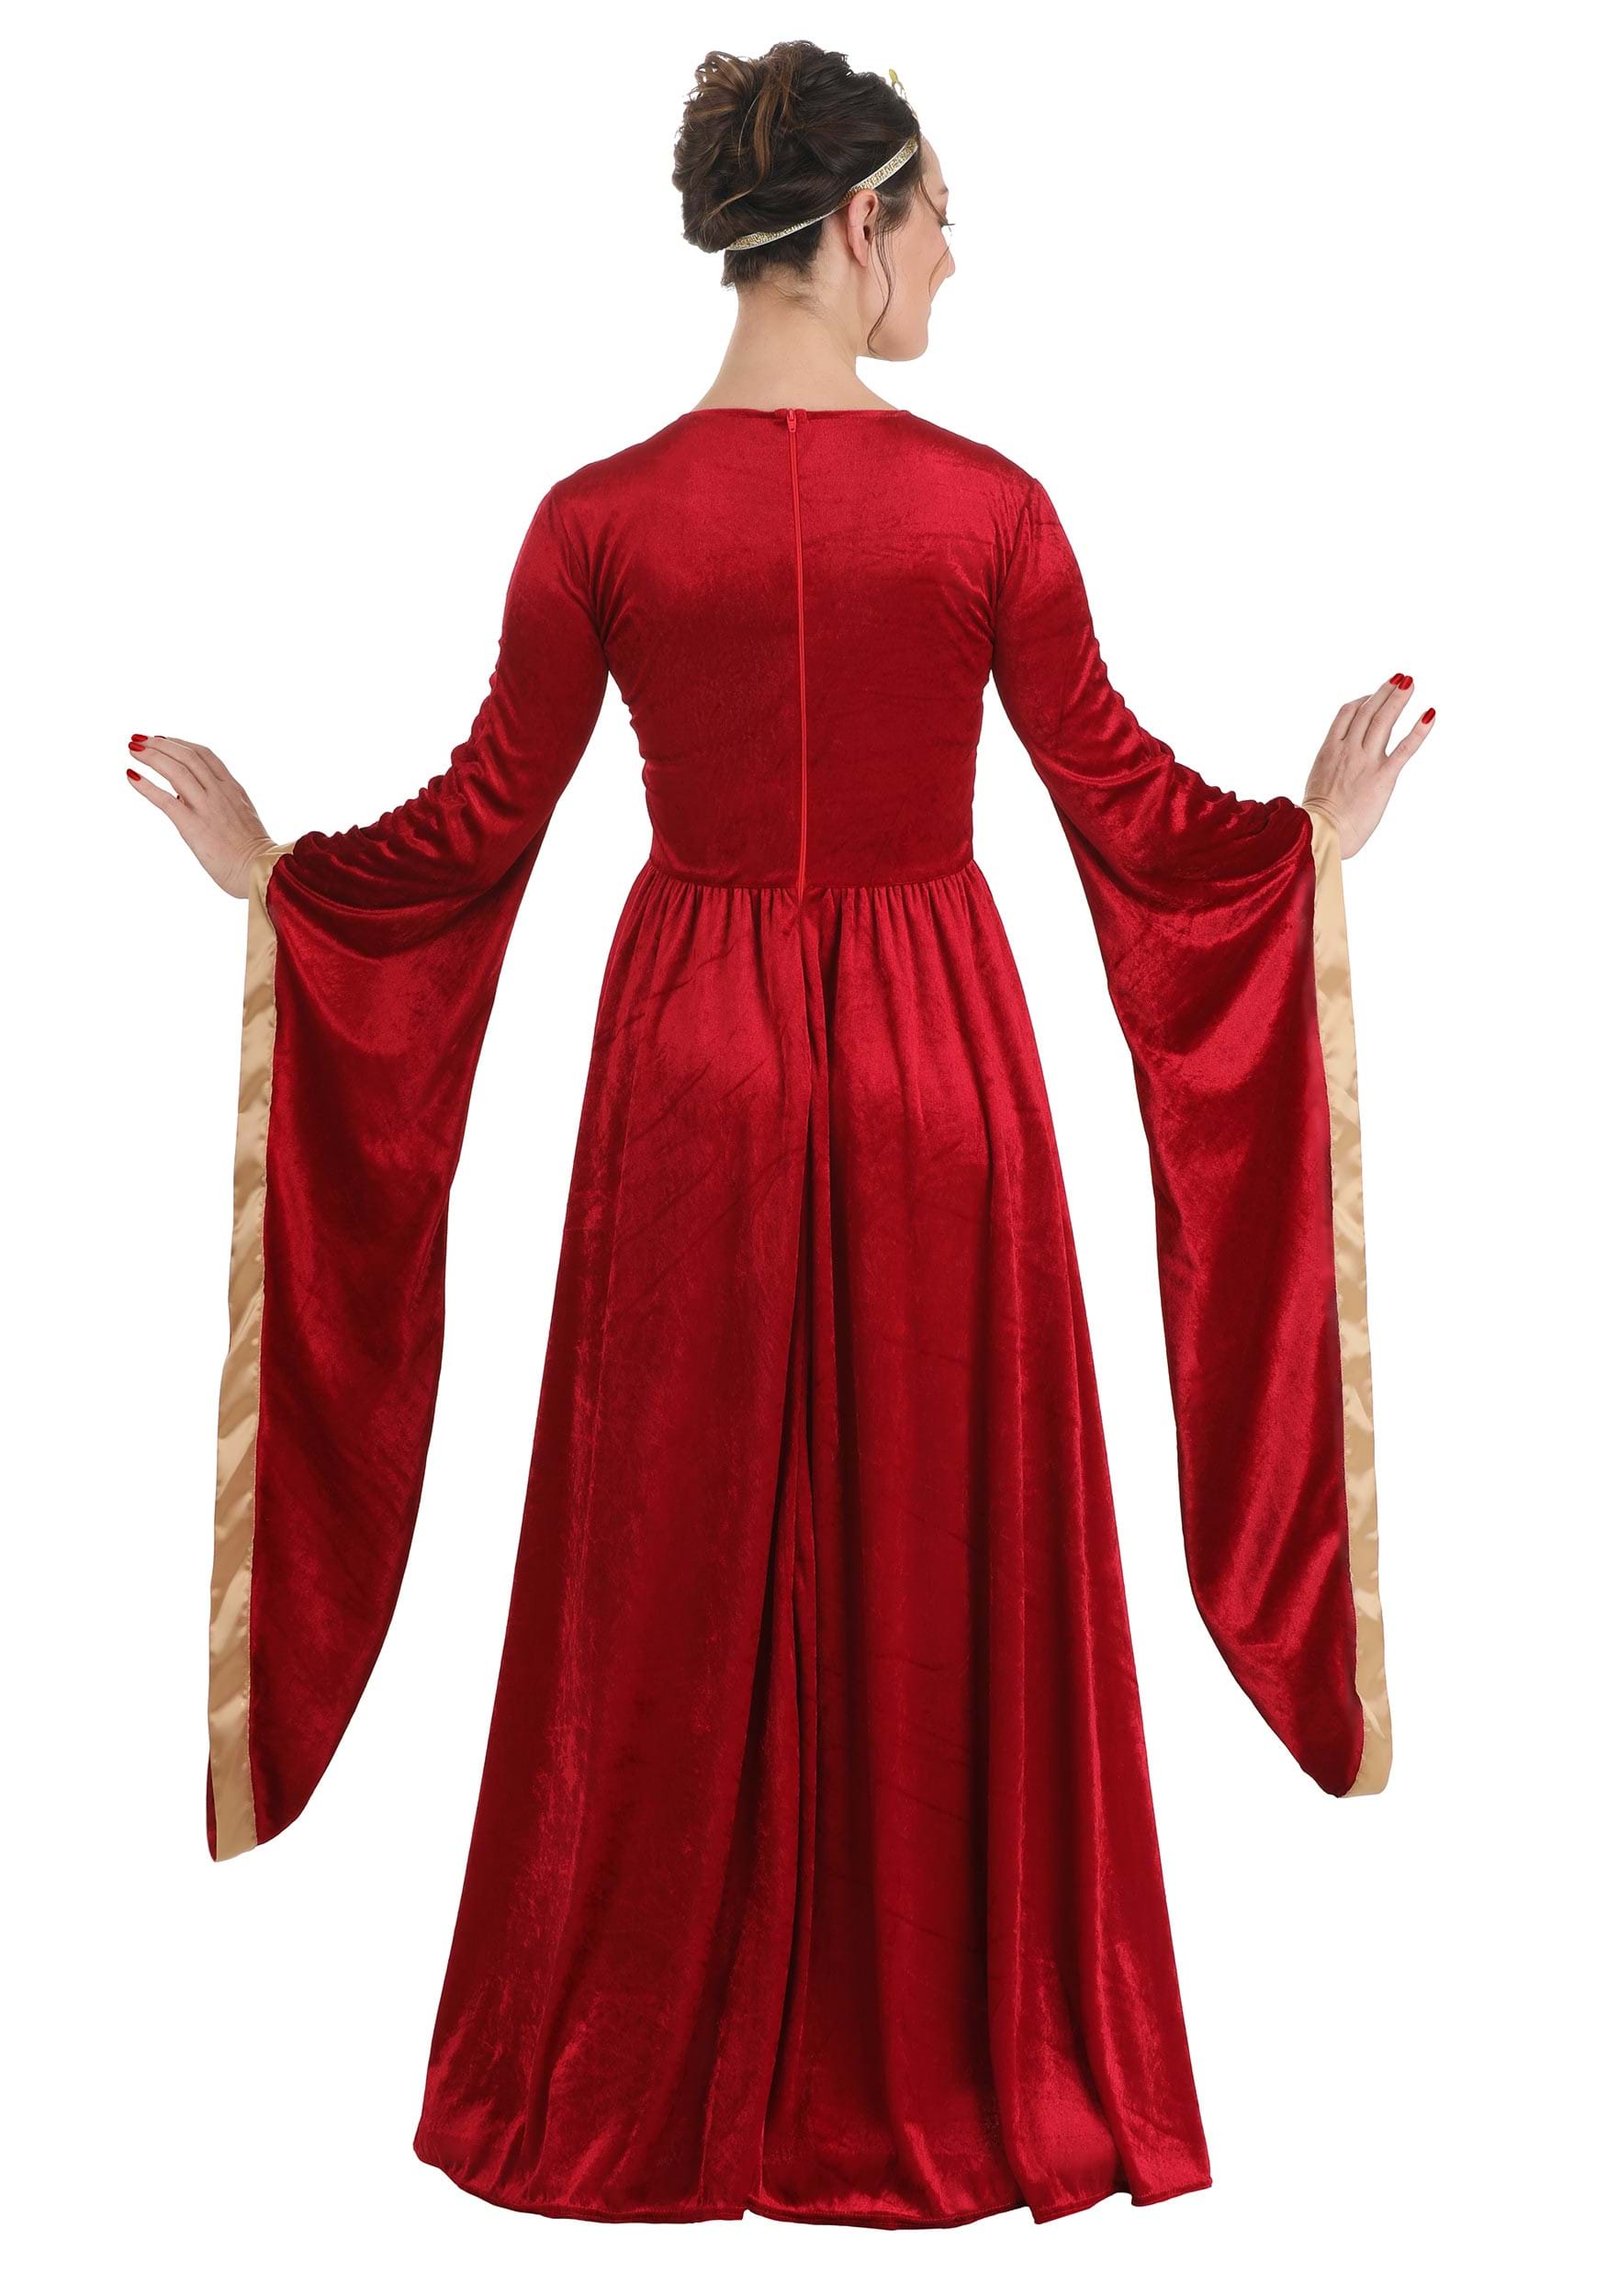 Adult Renaissance Maiden Fancy Dress Costume , Historical Fancy Dress Costumes